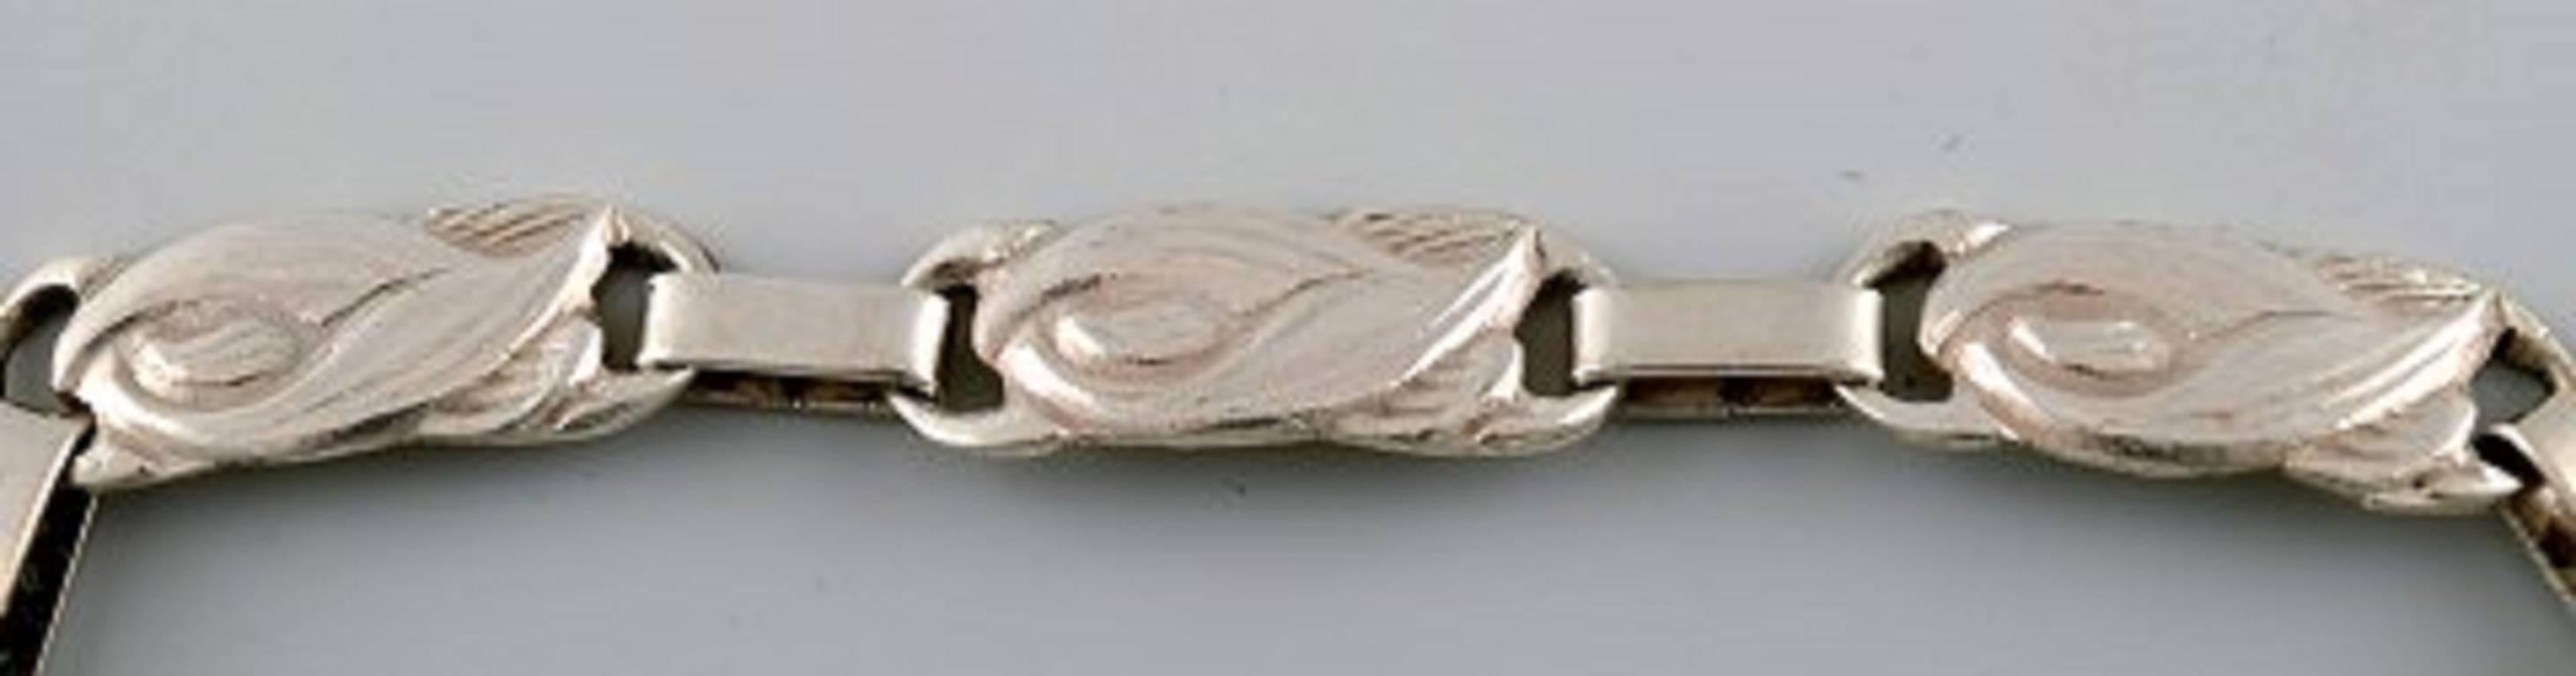 Vintage Danish silver bracelet in modern design, stamped CCGÅ, 830S.
1930 / 40s.
In perfect condition.
Measures 16 cm.